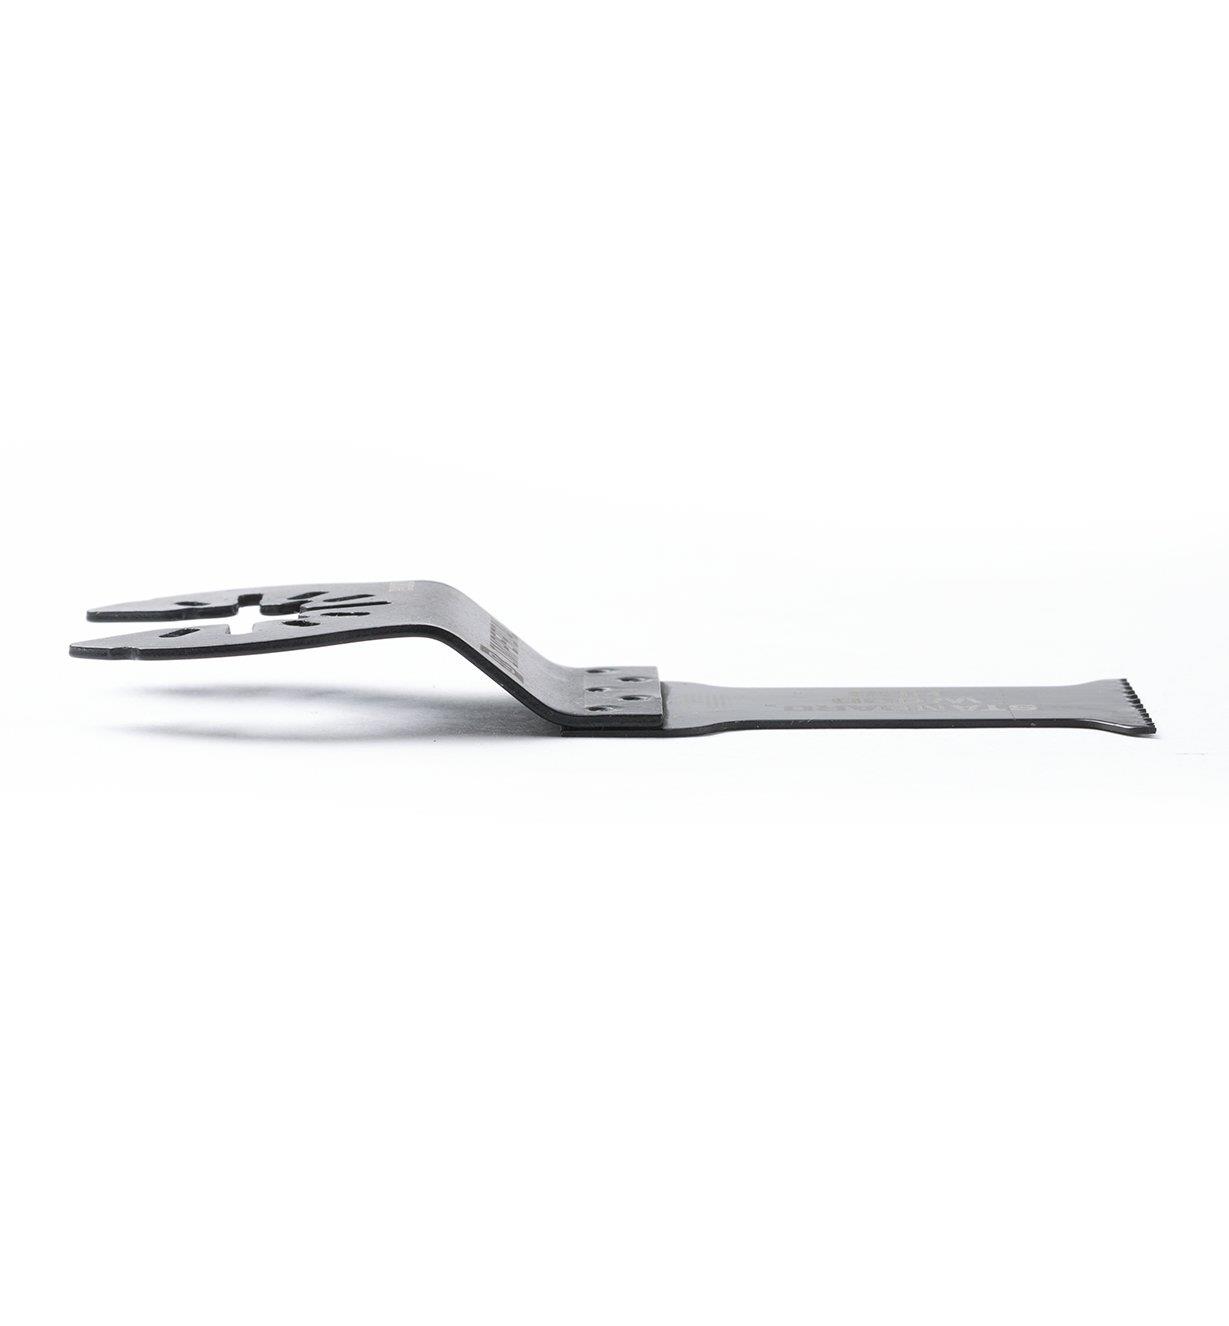 77J5902 - 1 1/4" x 1 5/8" 18 tpi High-Carbon Steel Blade, each